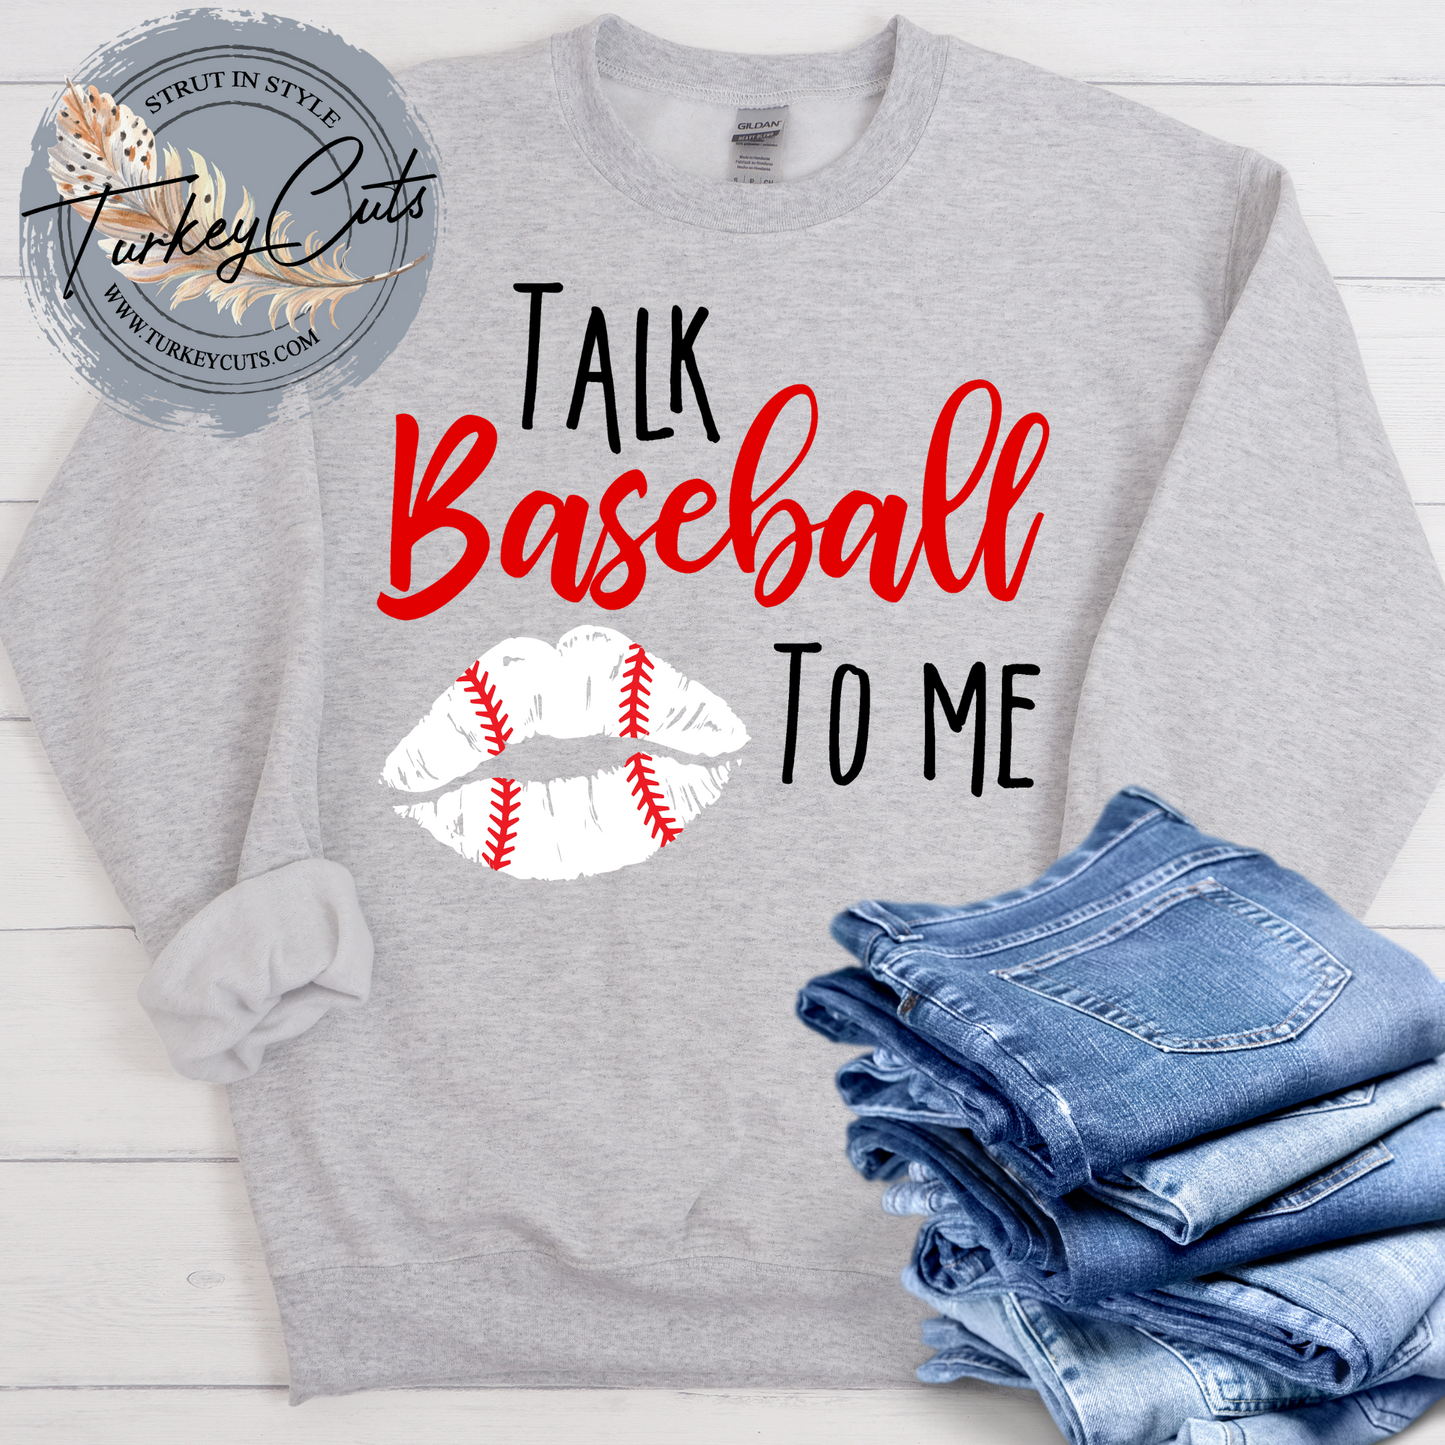 Talk Baseball To Me - Adult